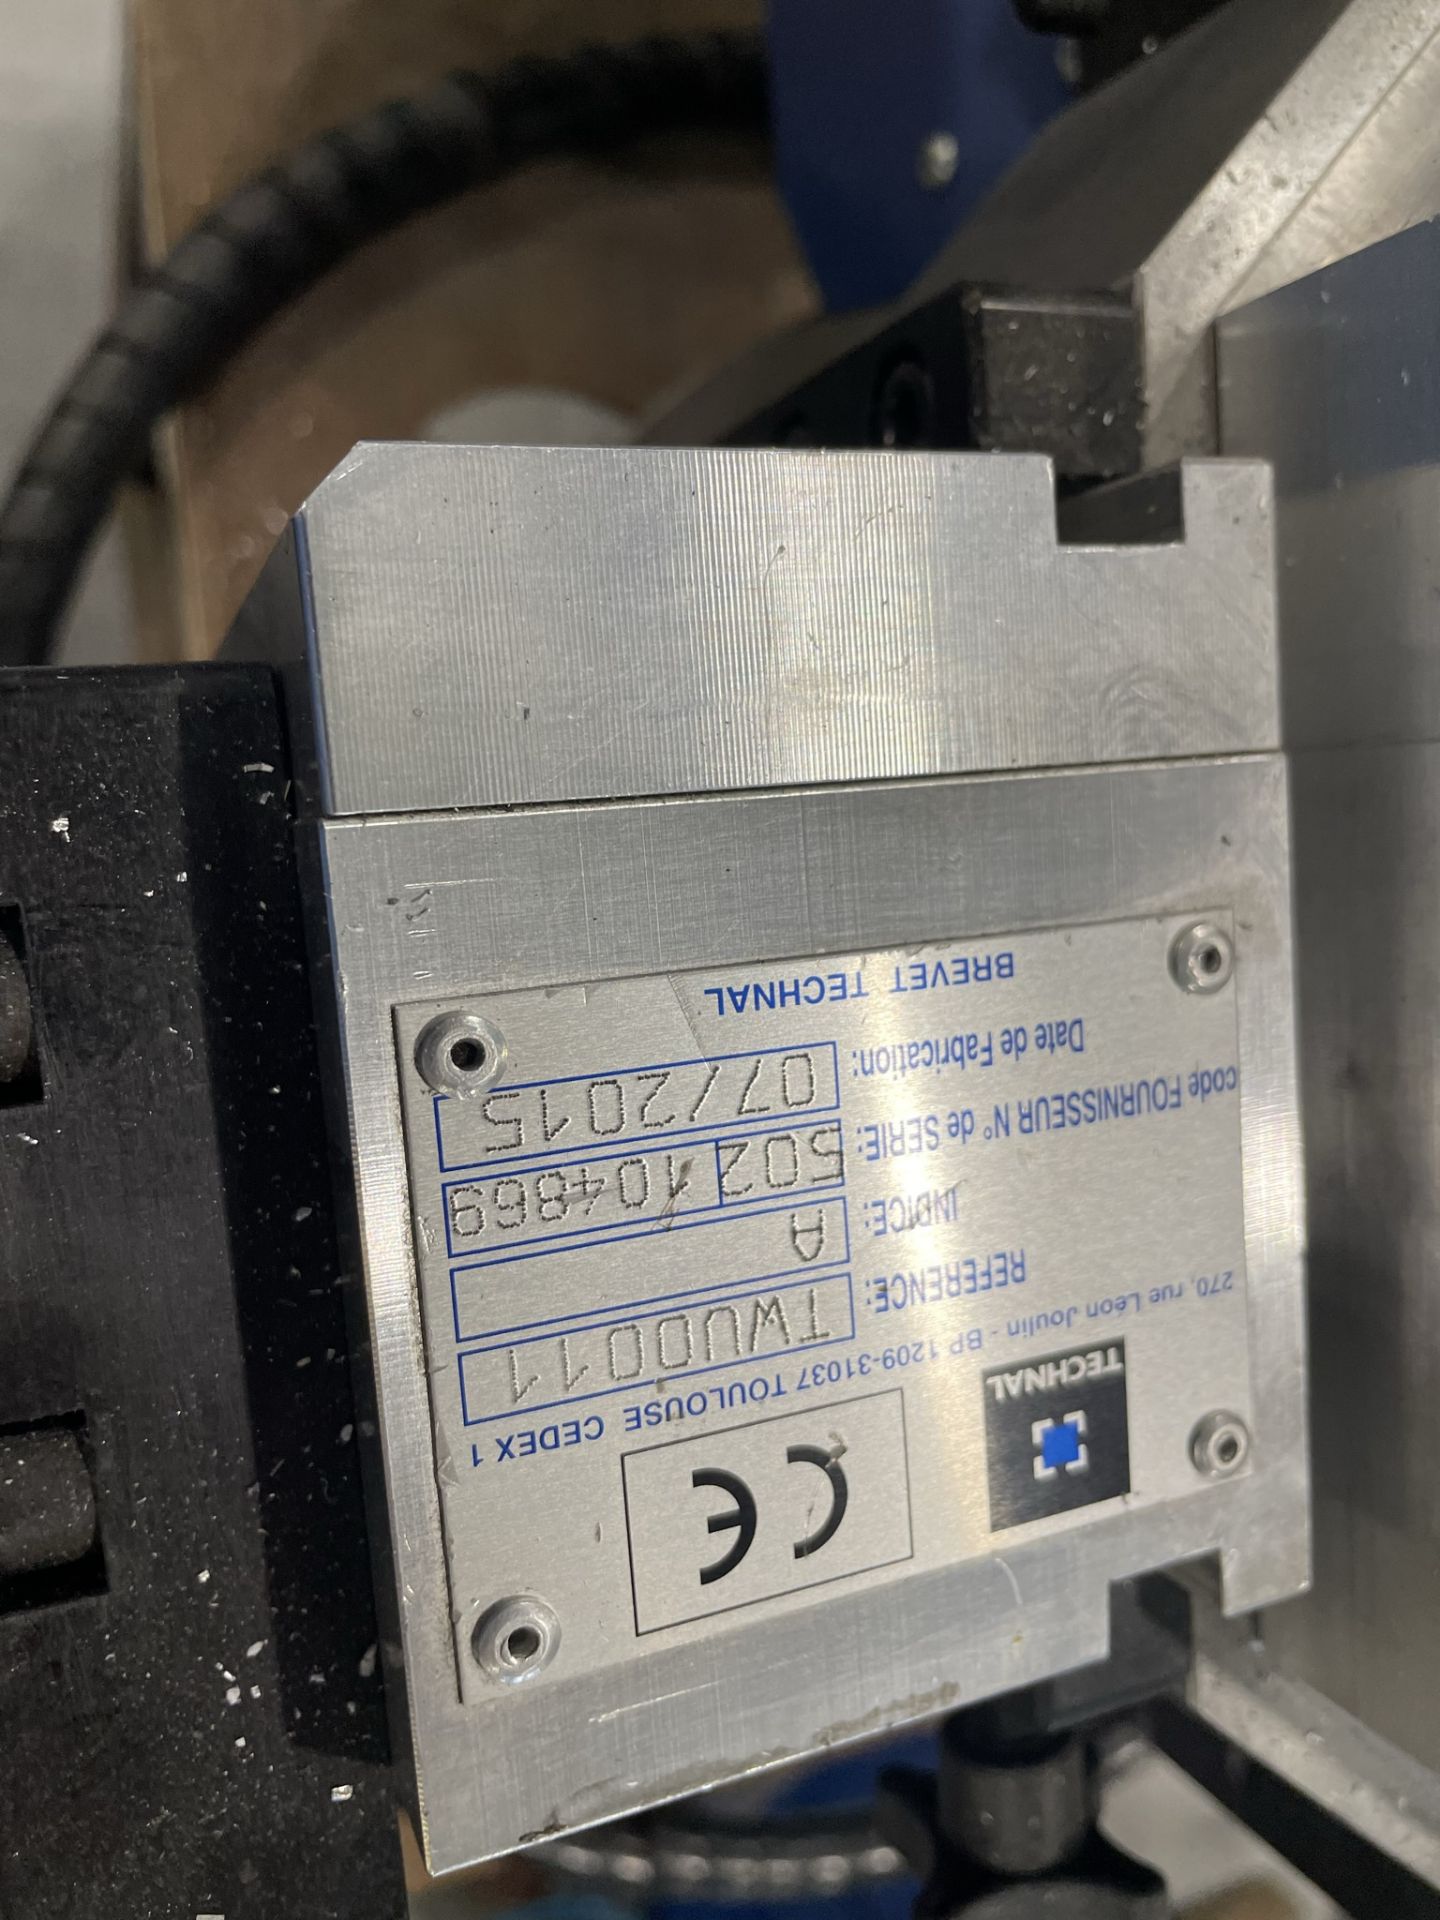 Hydro, TWU0005/104869 pneumatic press, Serial No. 849 (DOM: 2014), Technal WU0009, EK7017, - Bild 4 aus 5